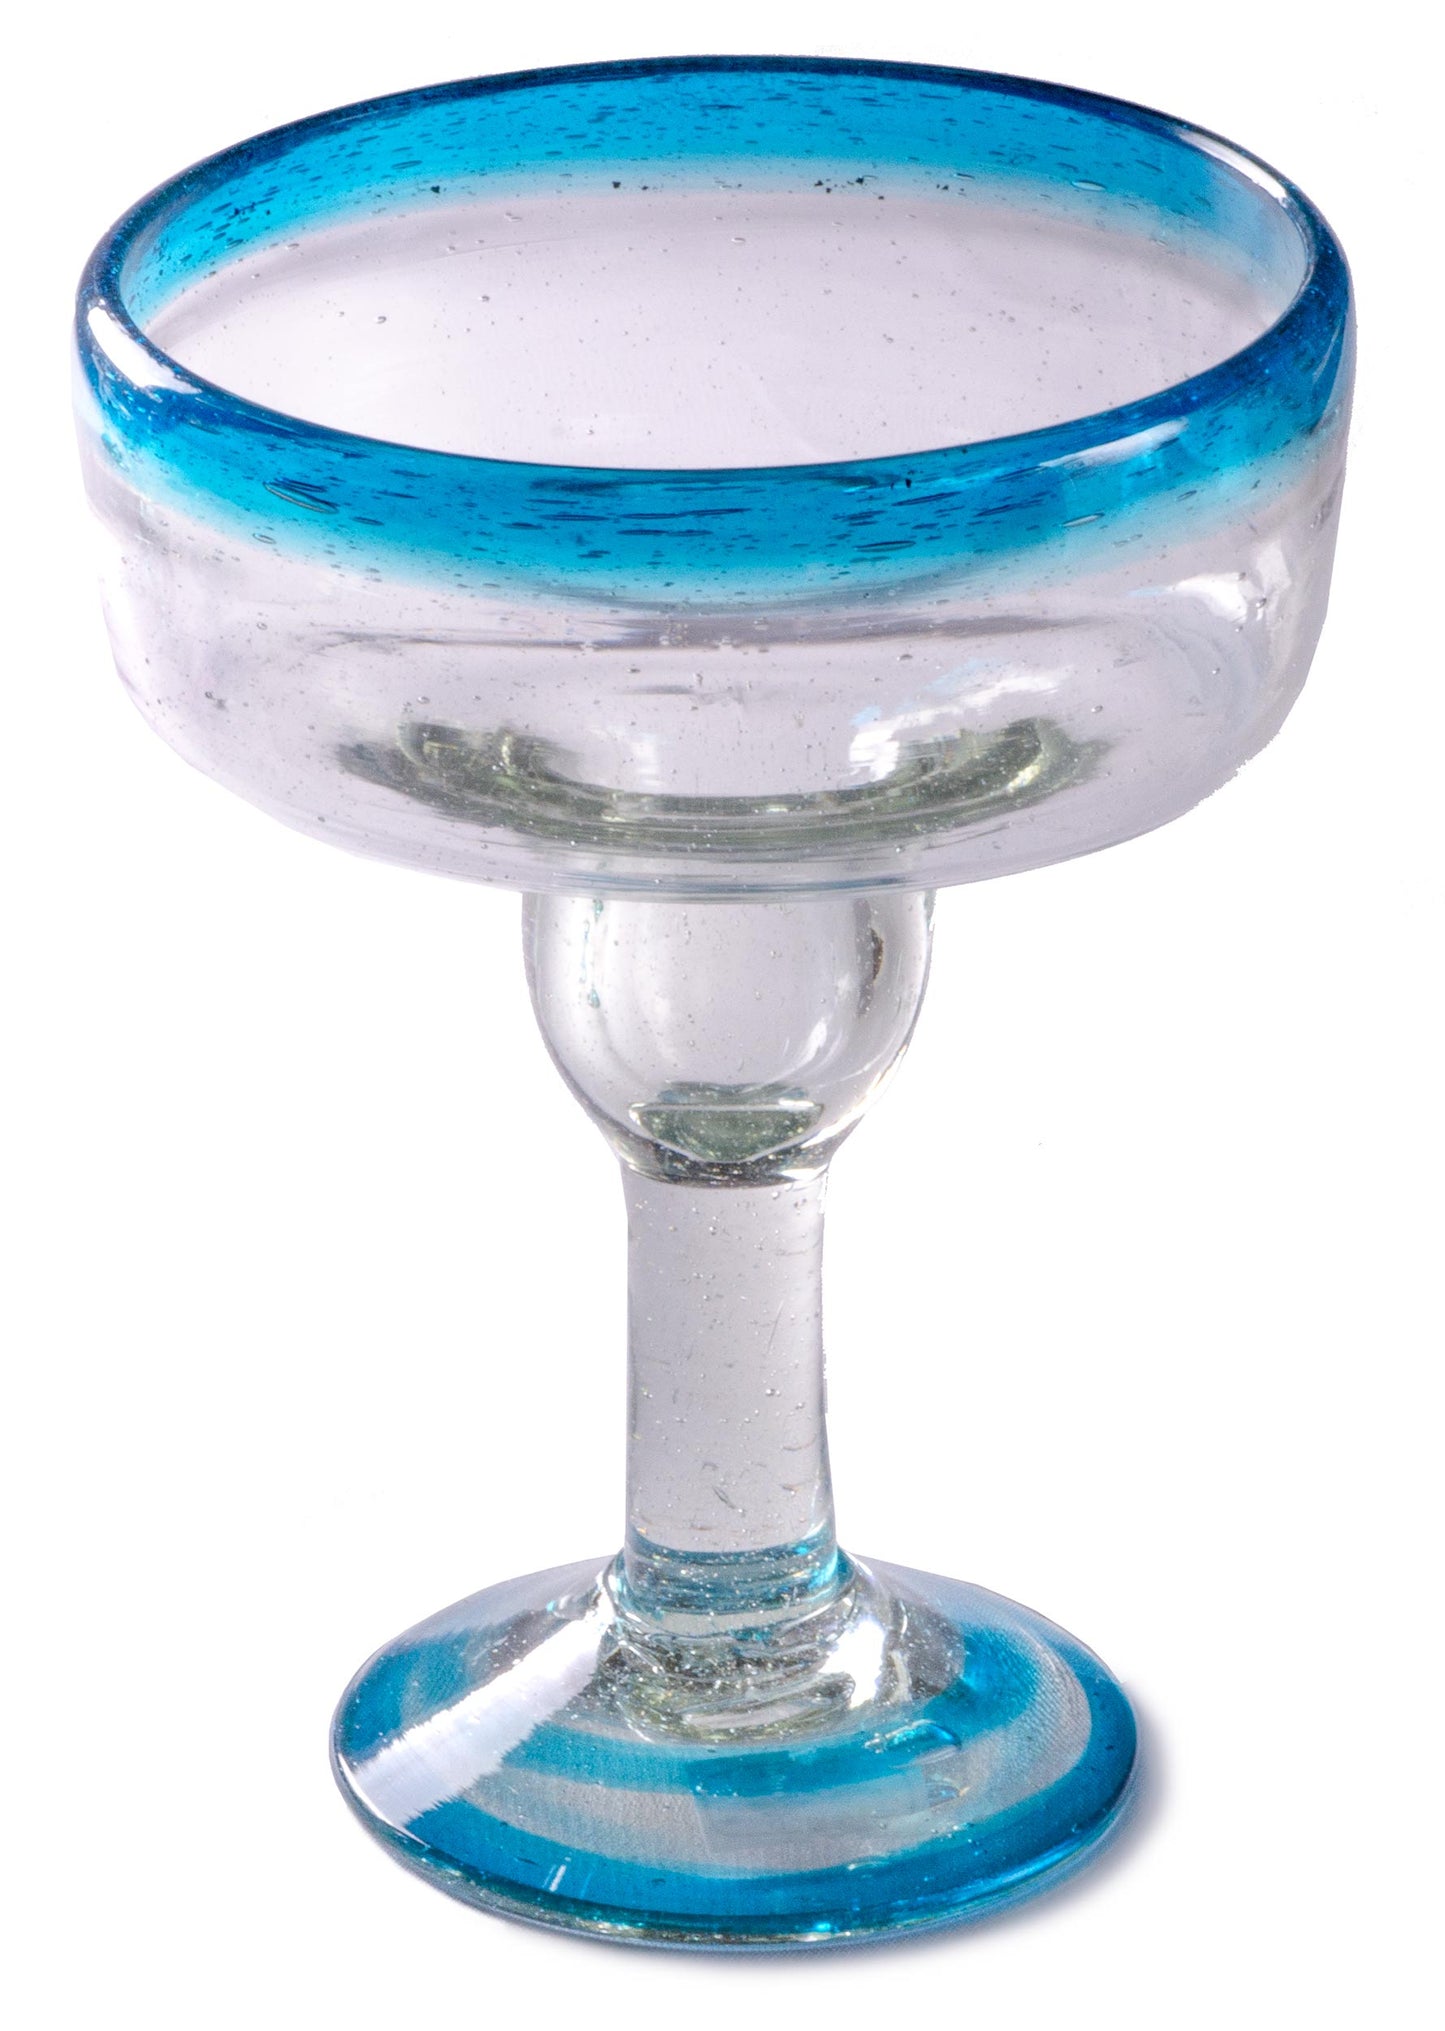 Turquoise Rim Coupette Margarita - 12 oz  - Orion's Table